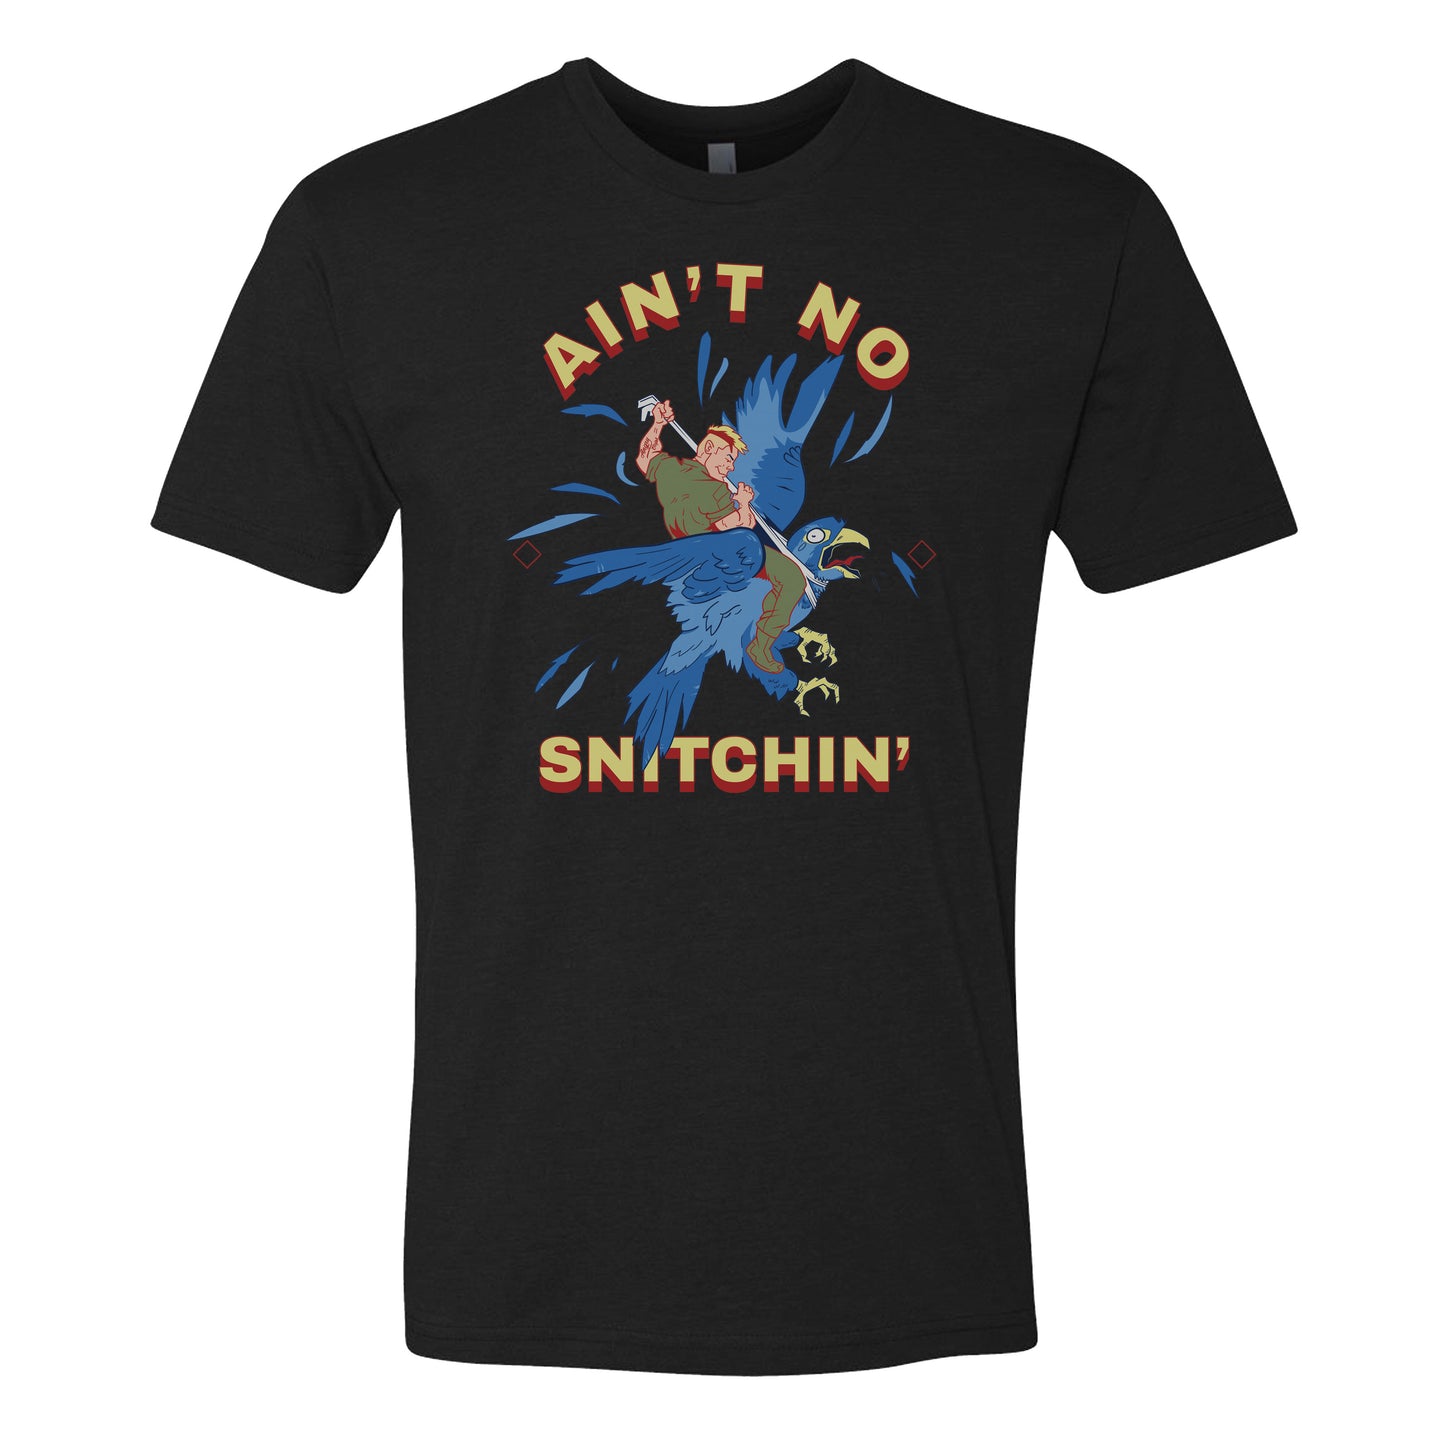 Ain't No Snitchin' Tee